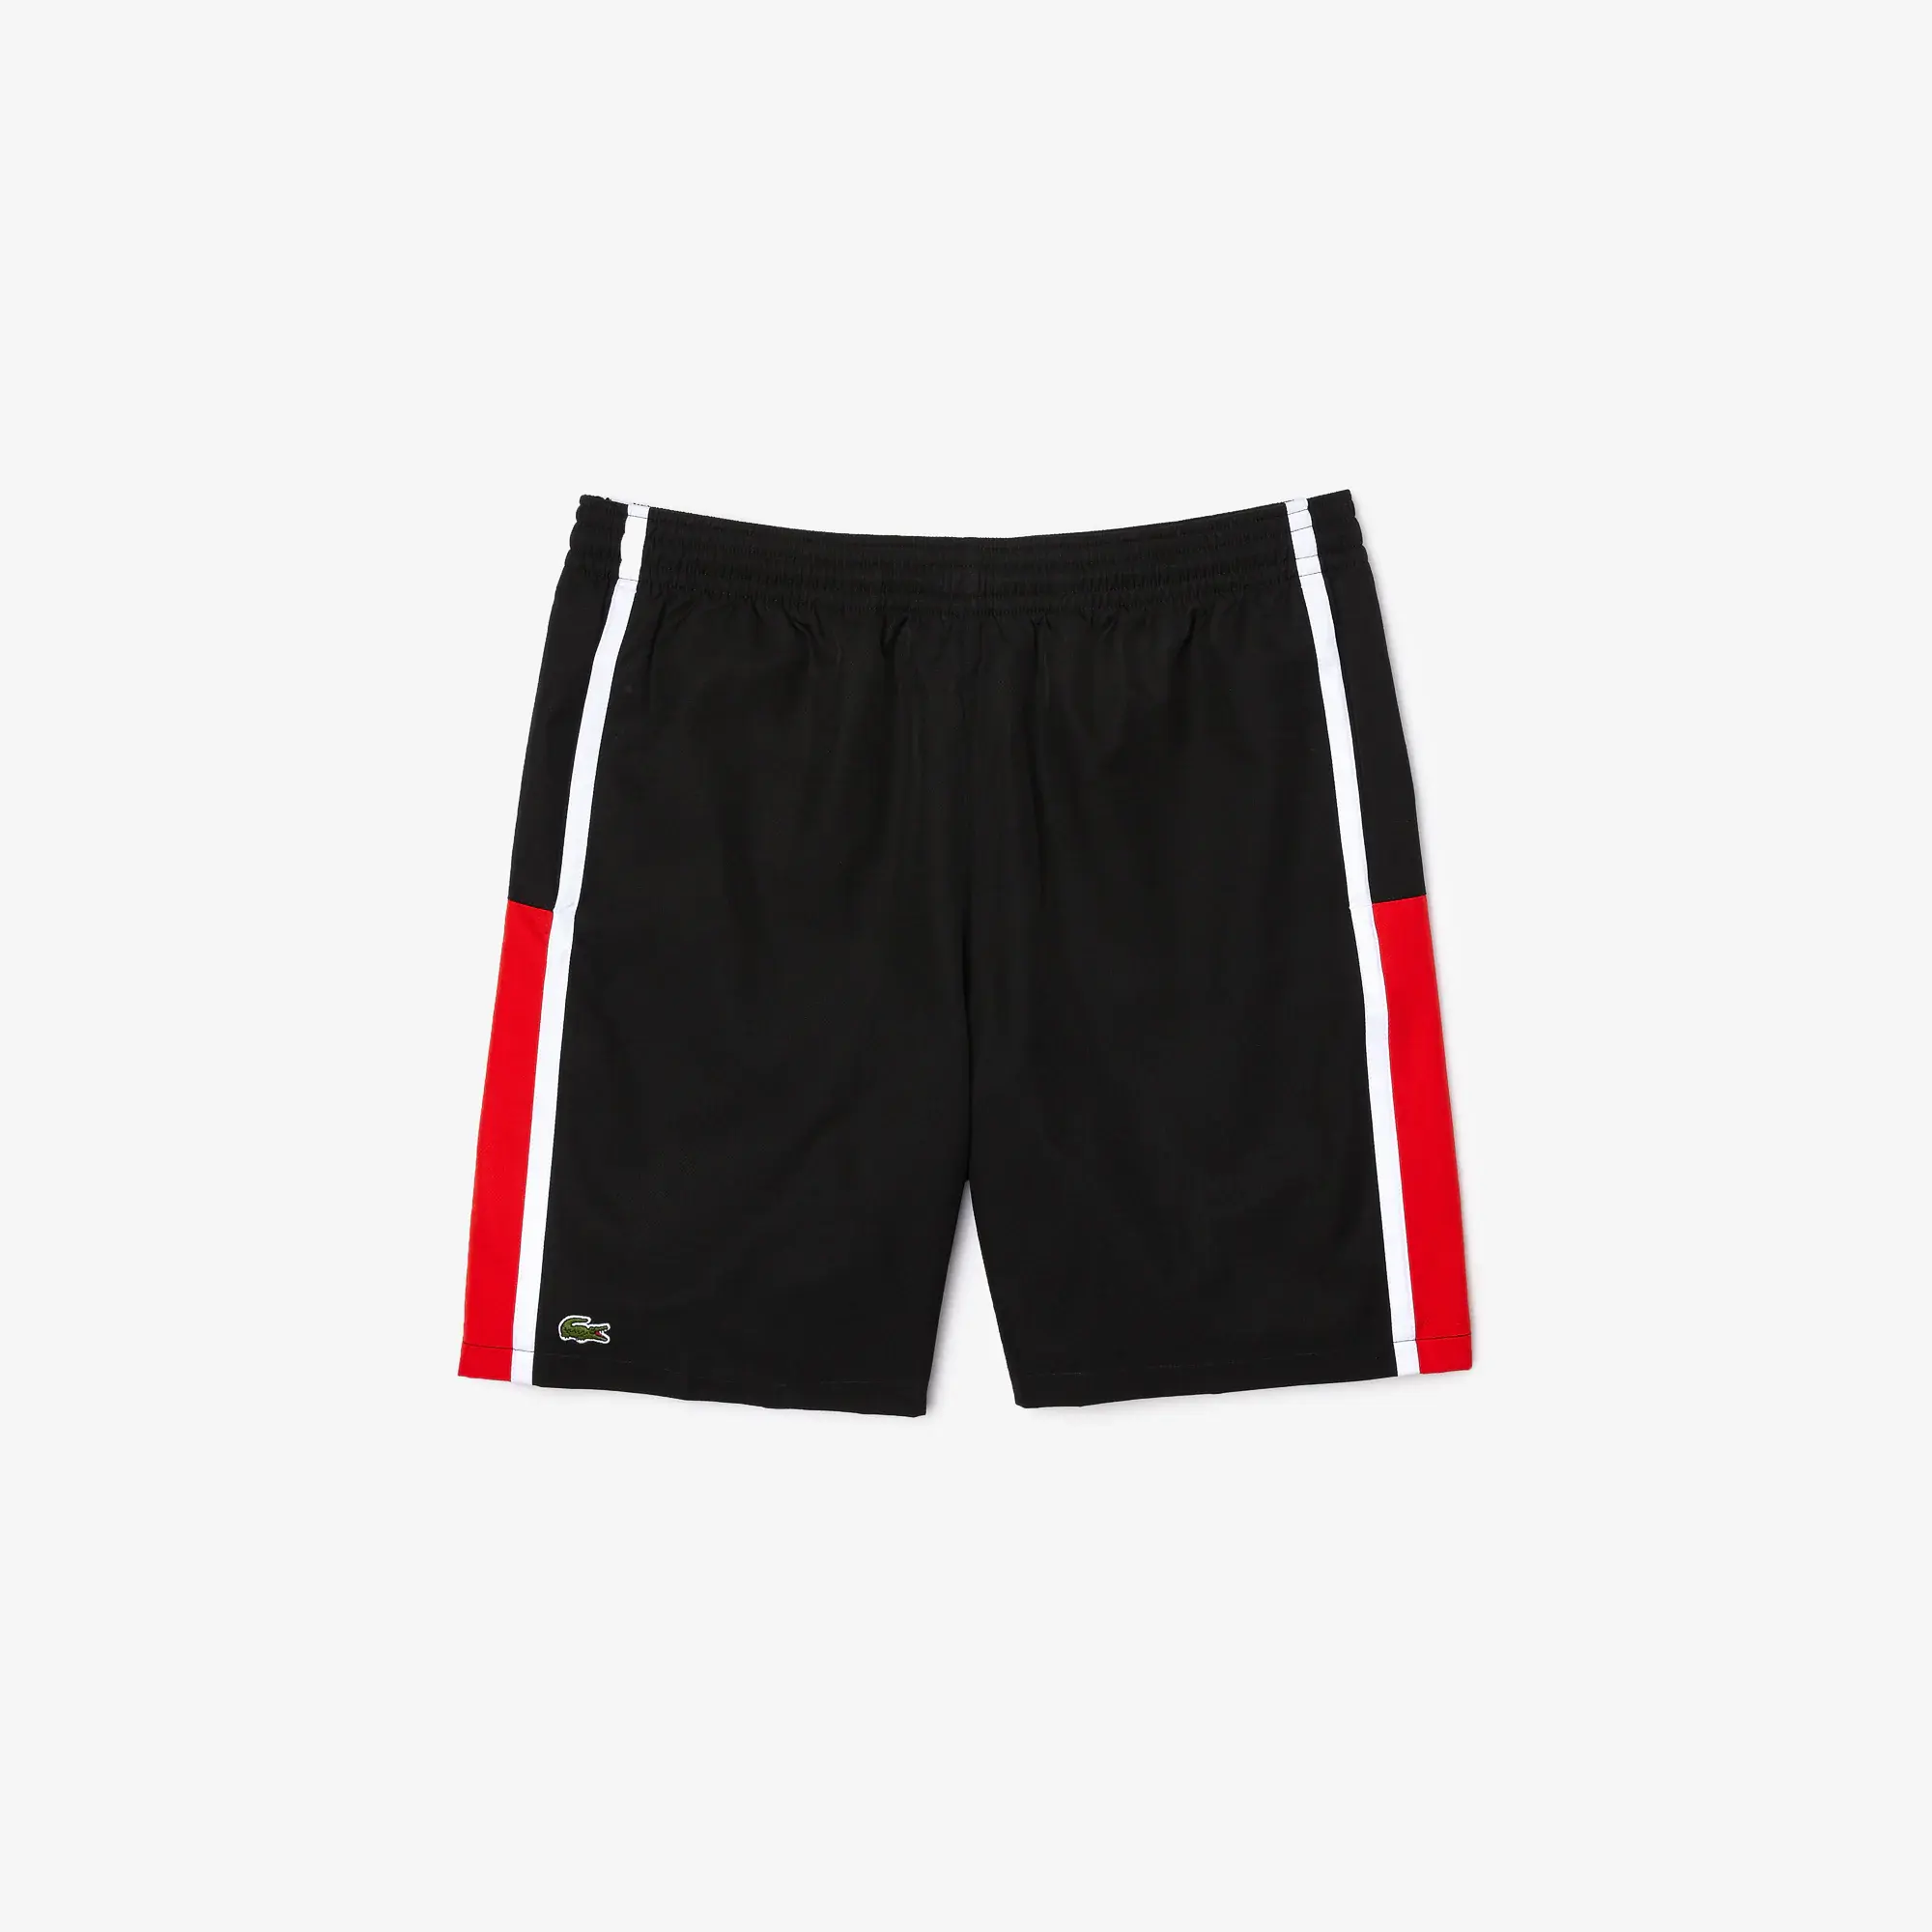 Lacoste Men's SPORT Colorblock Panels Lightweight Shorts. 2